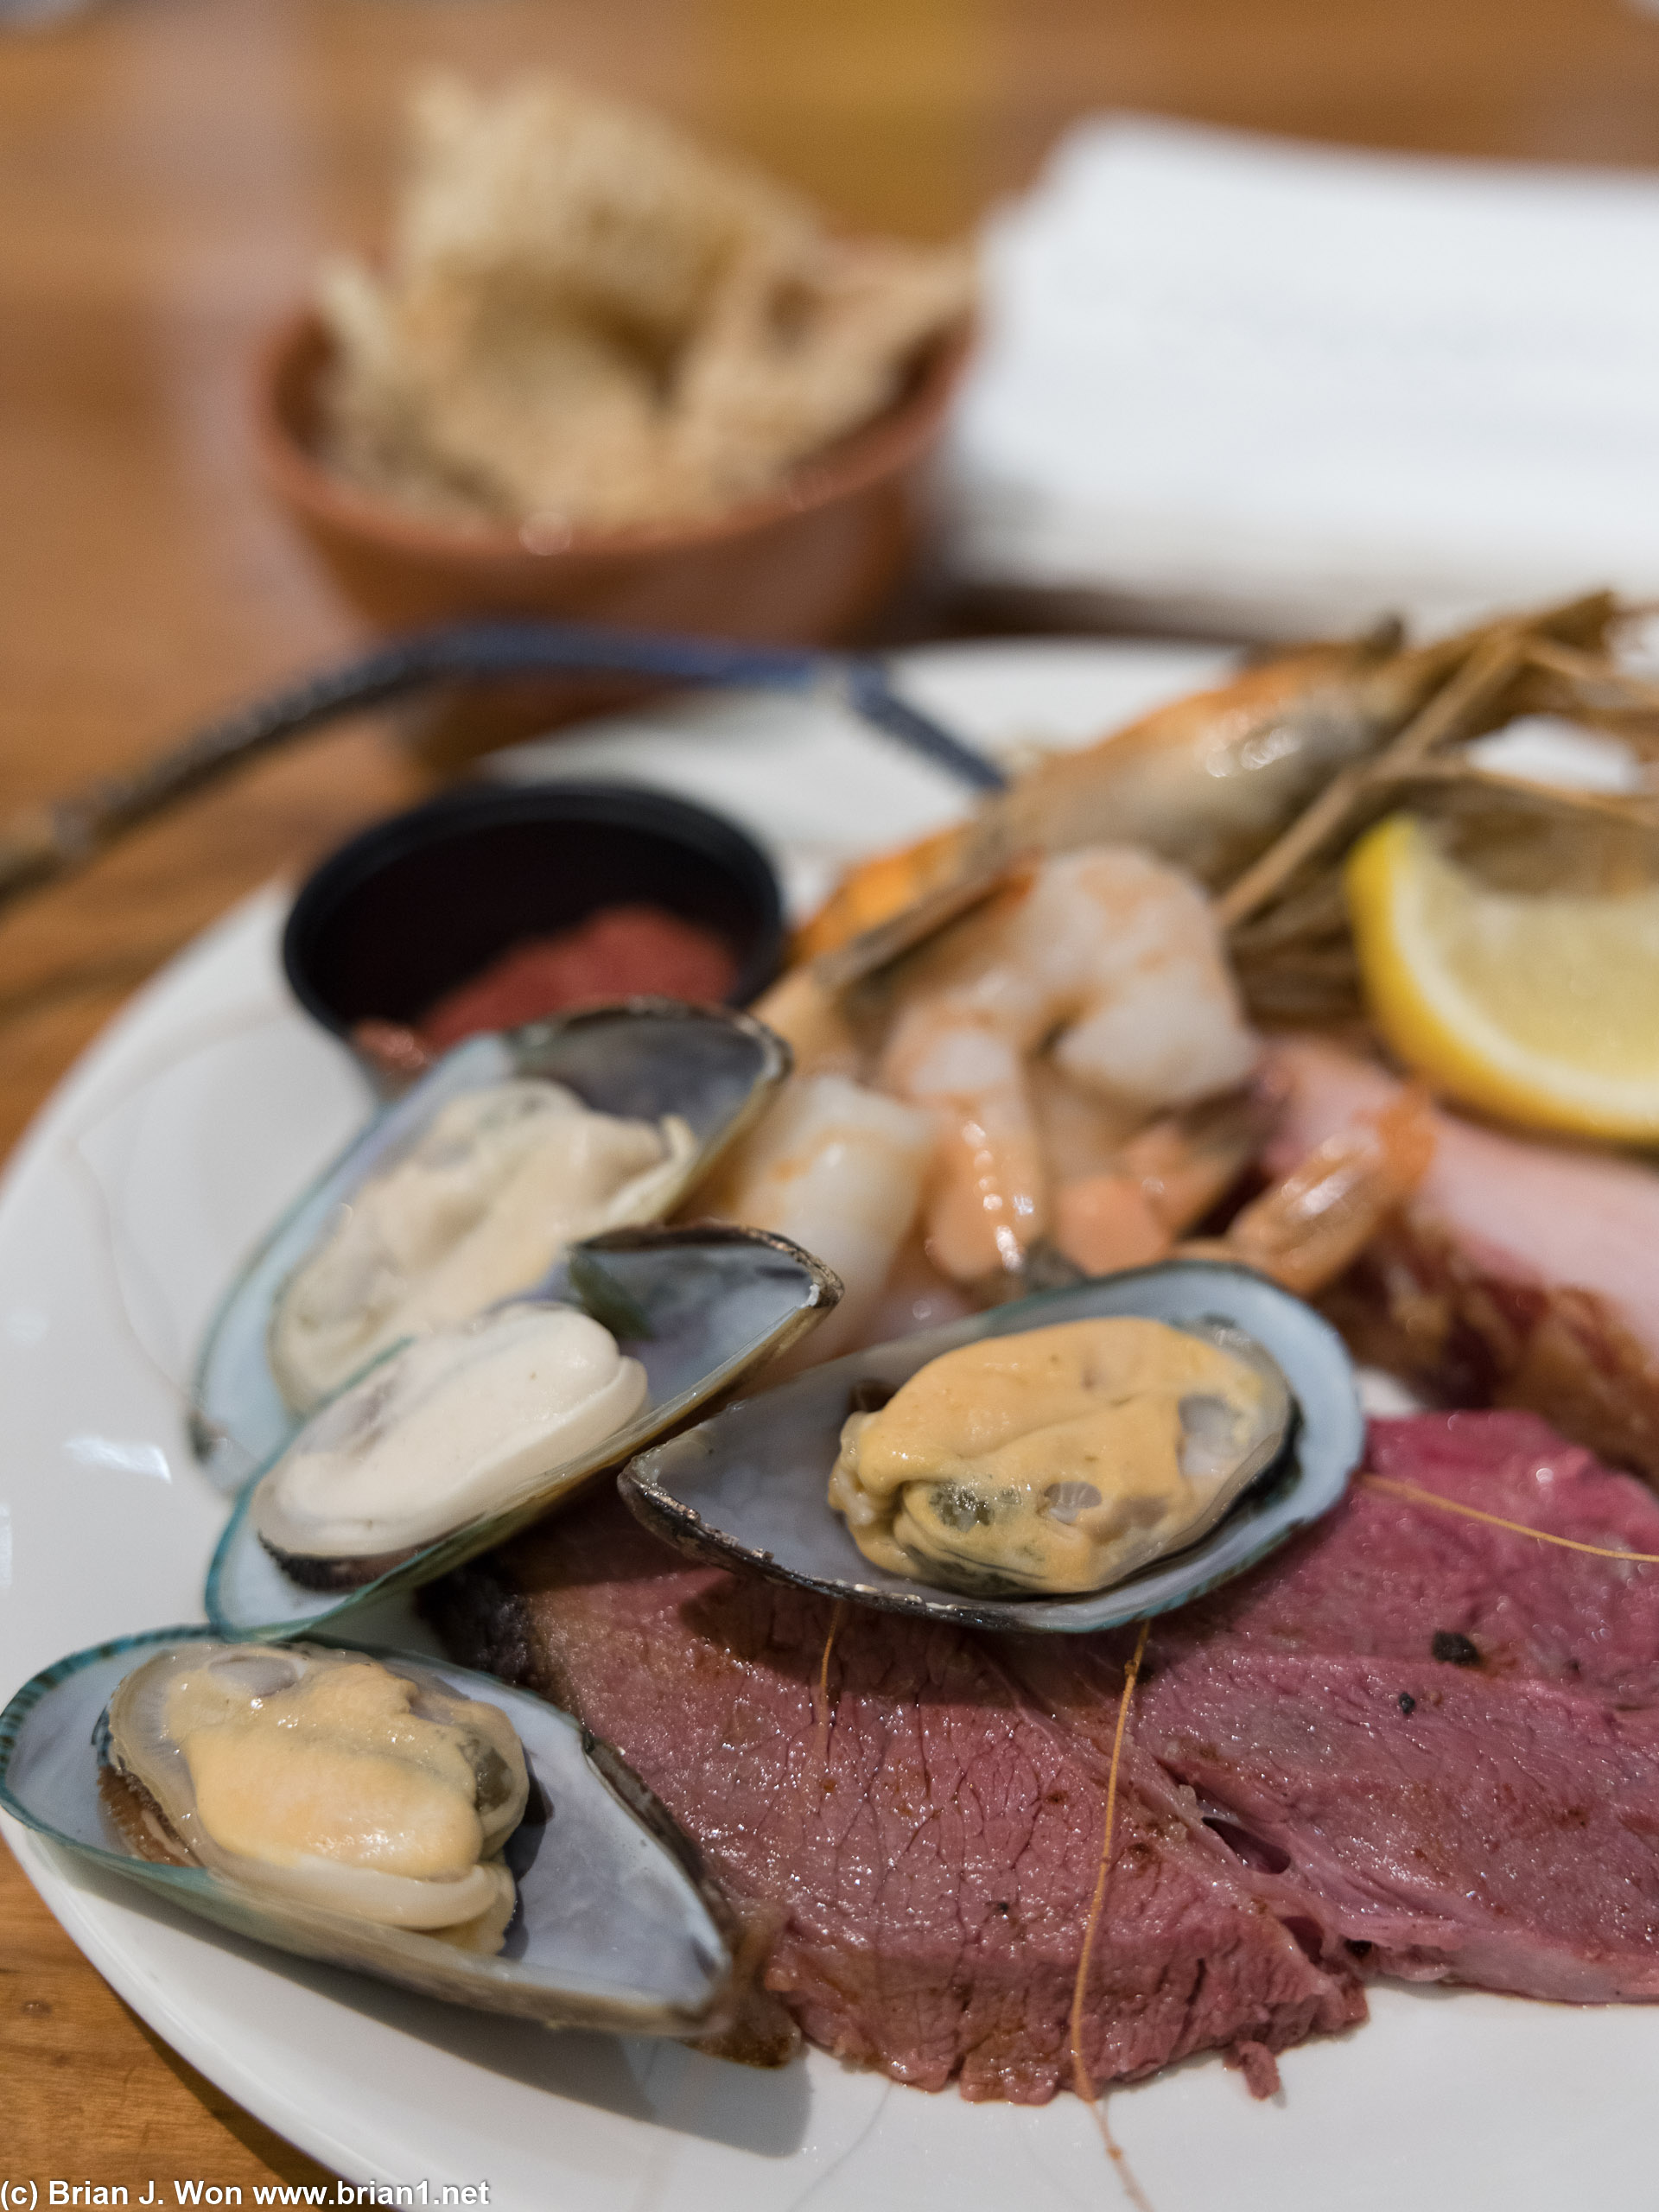 Green mussels, waygu roast beef, shrimp, pork belly, crawfish...